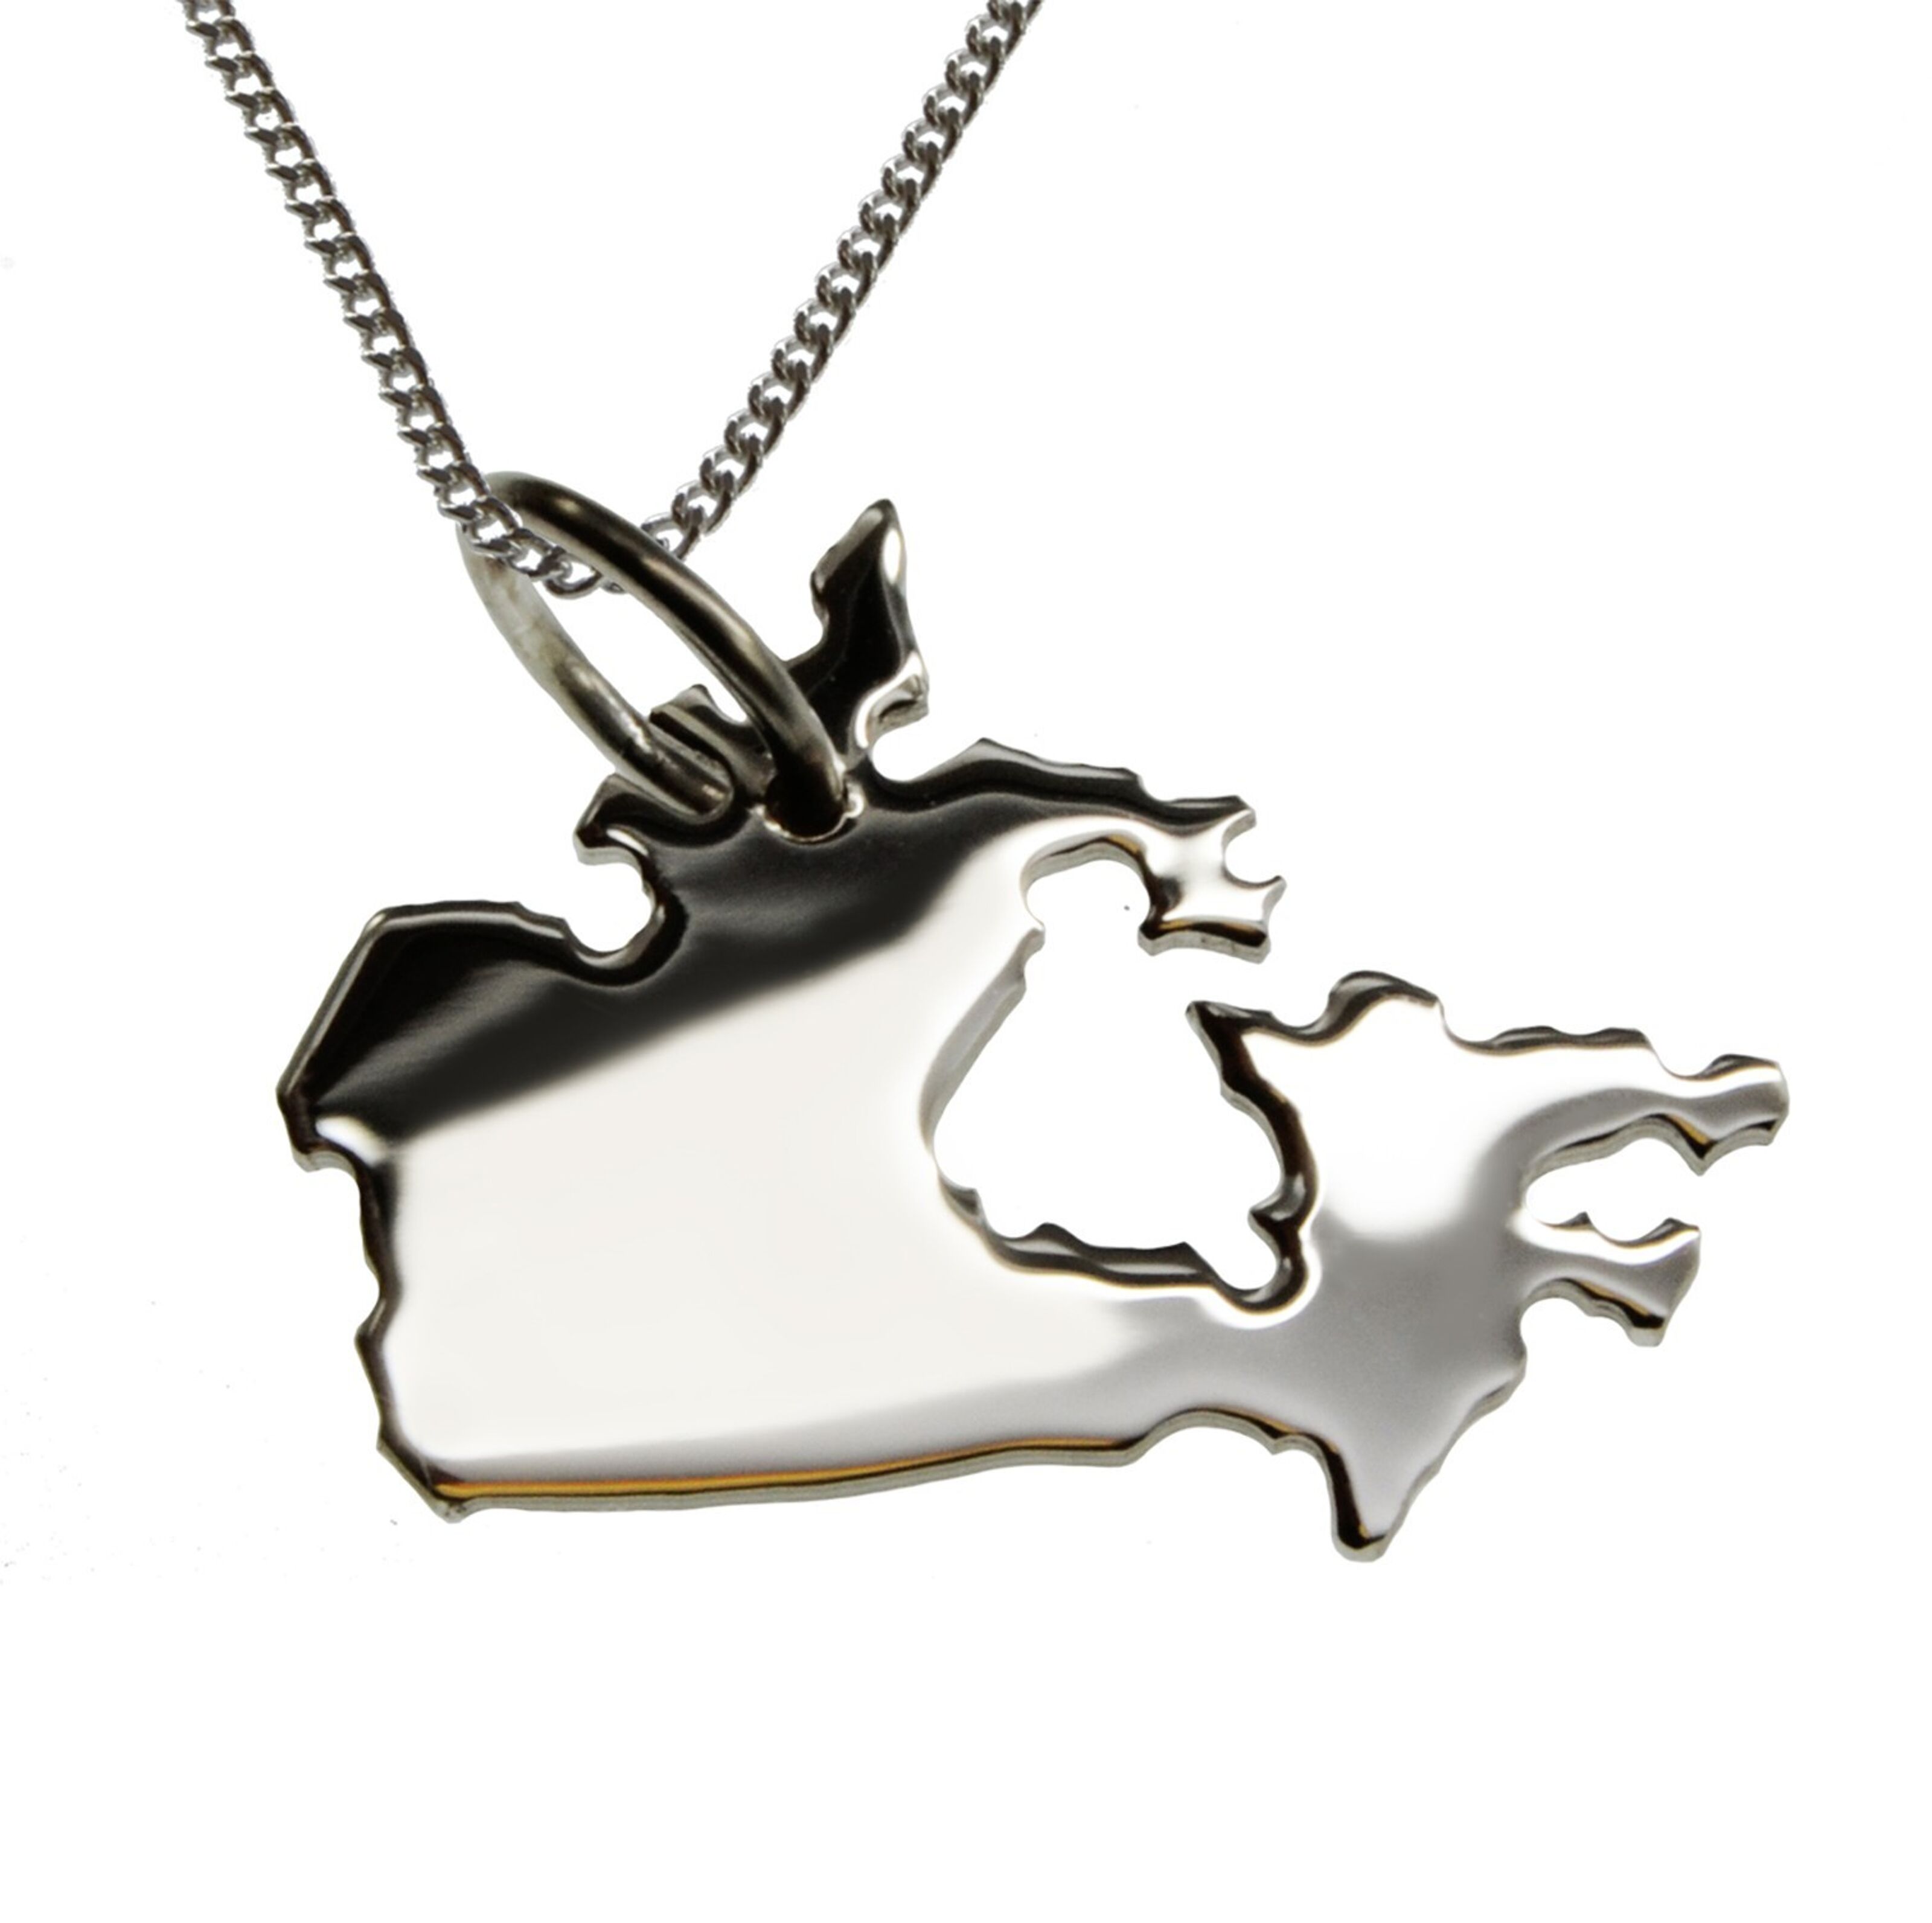 Buy wholesale 50cm necklace + Canada pendant in solid 925 silver